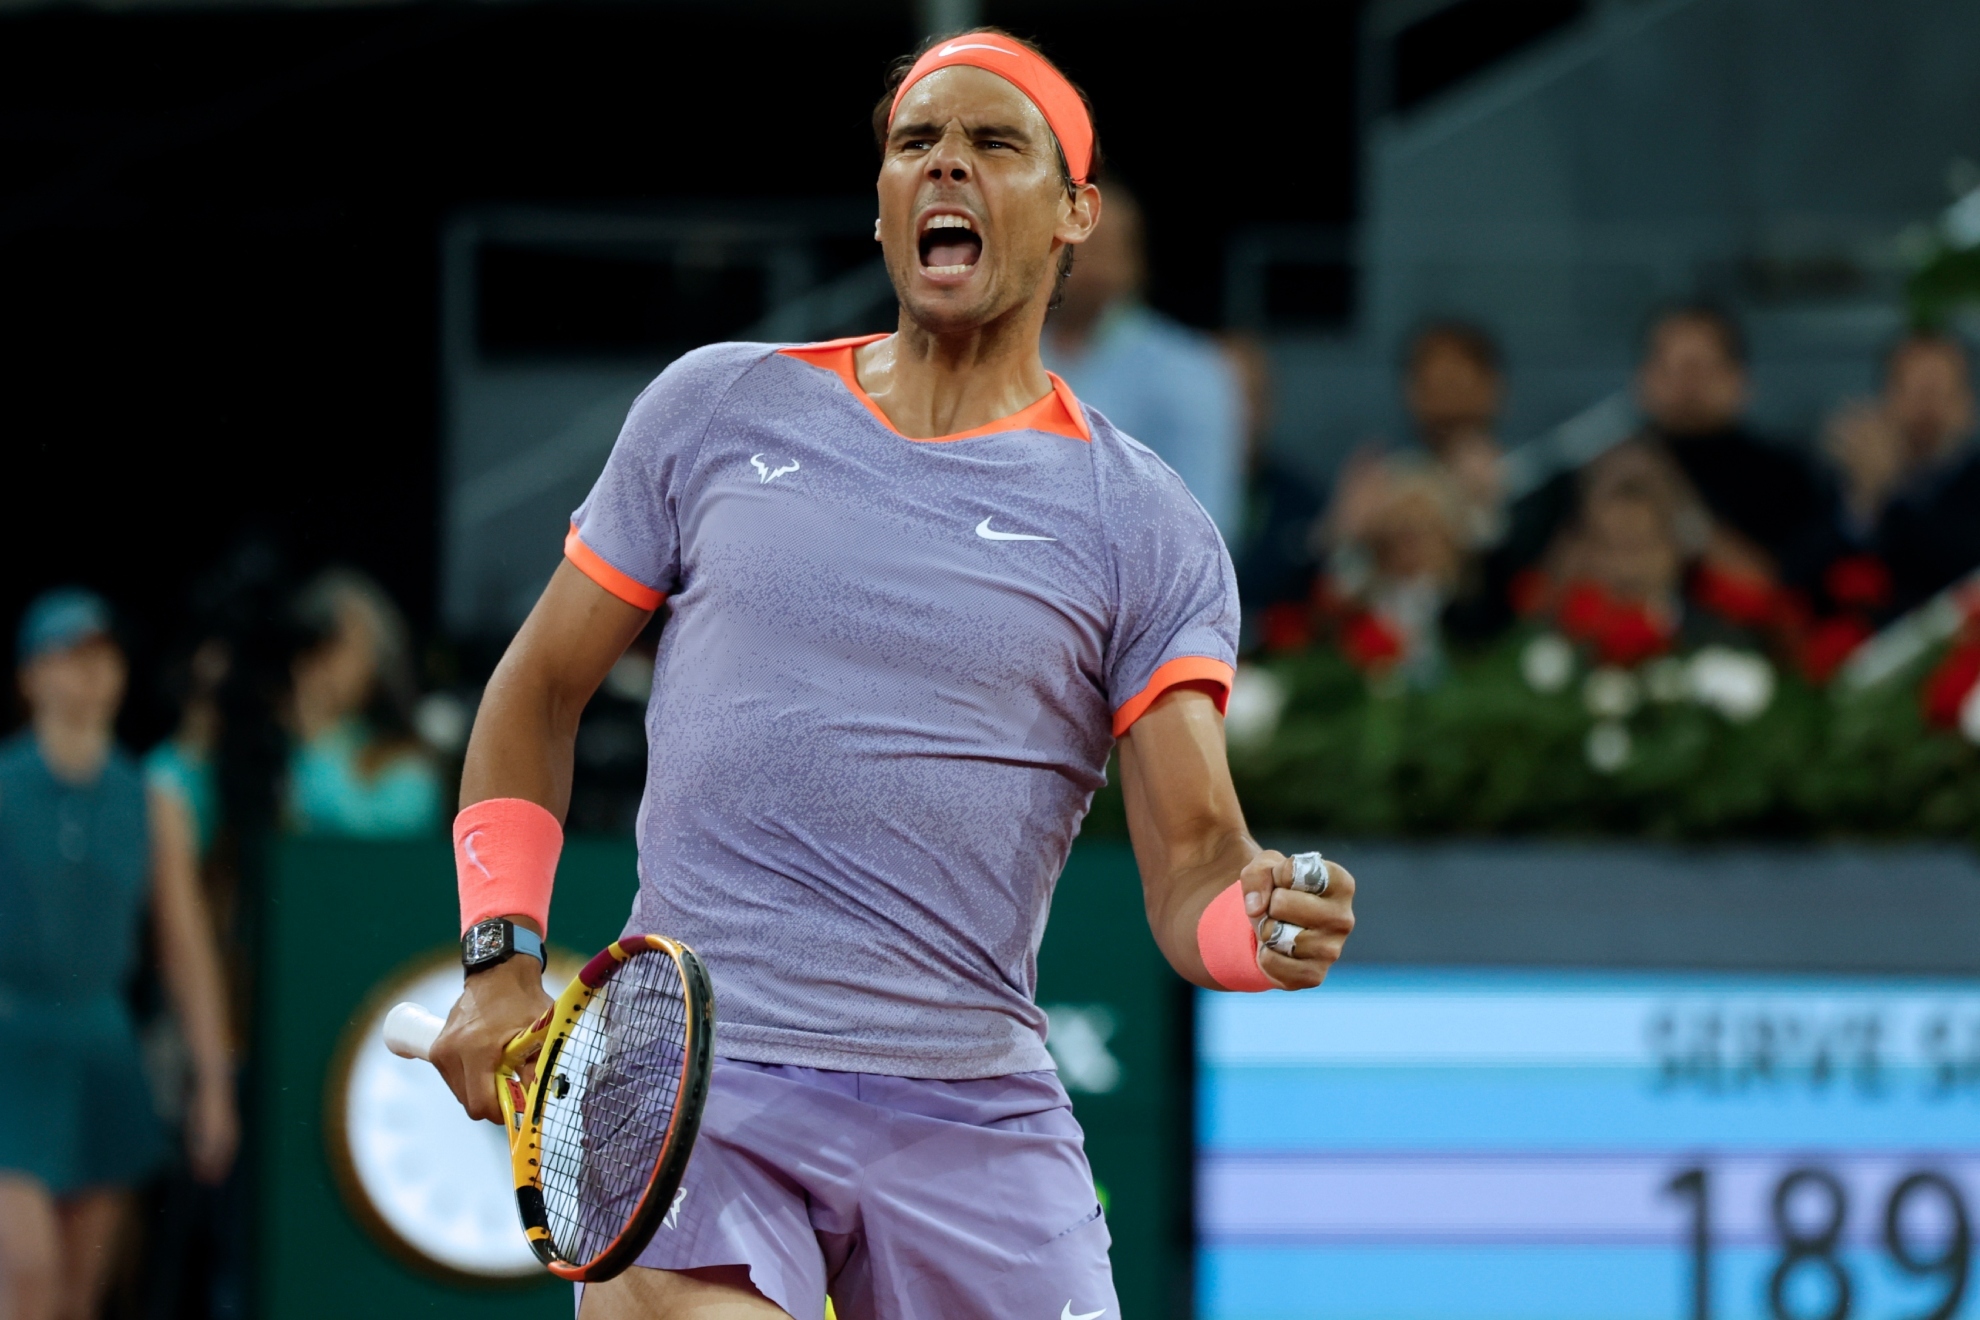 Nadal celebrates a point.